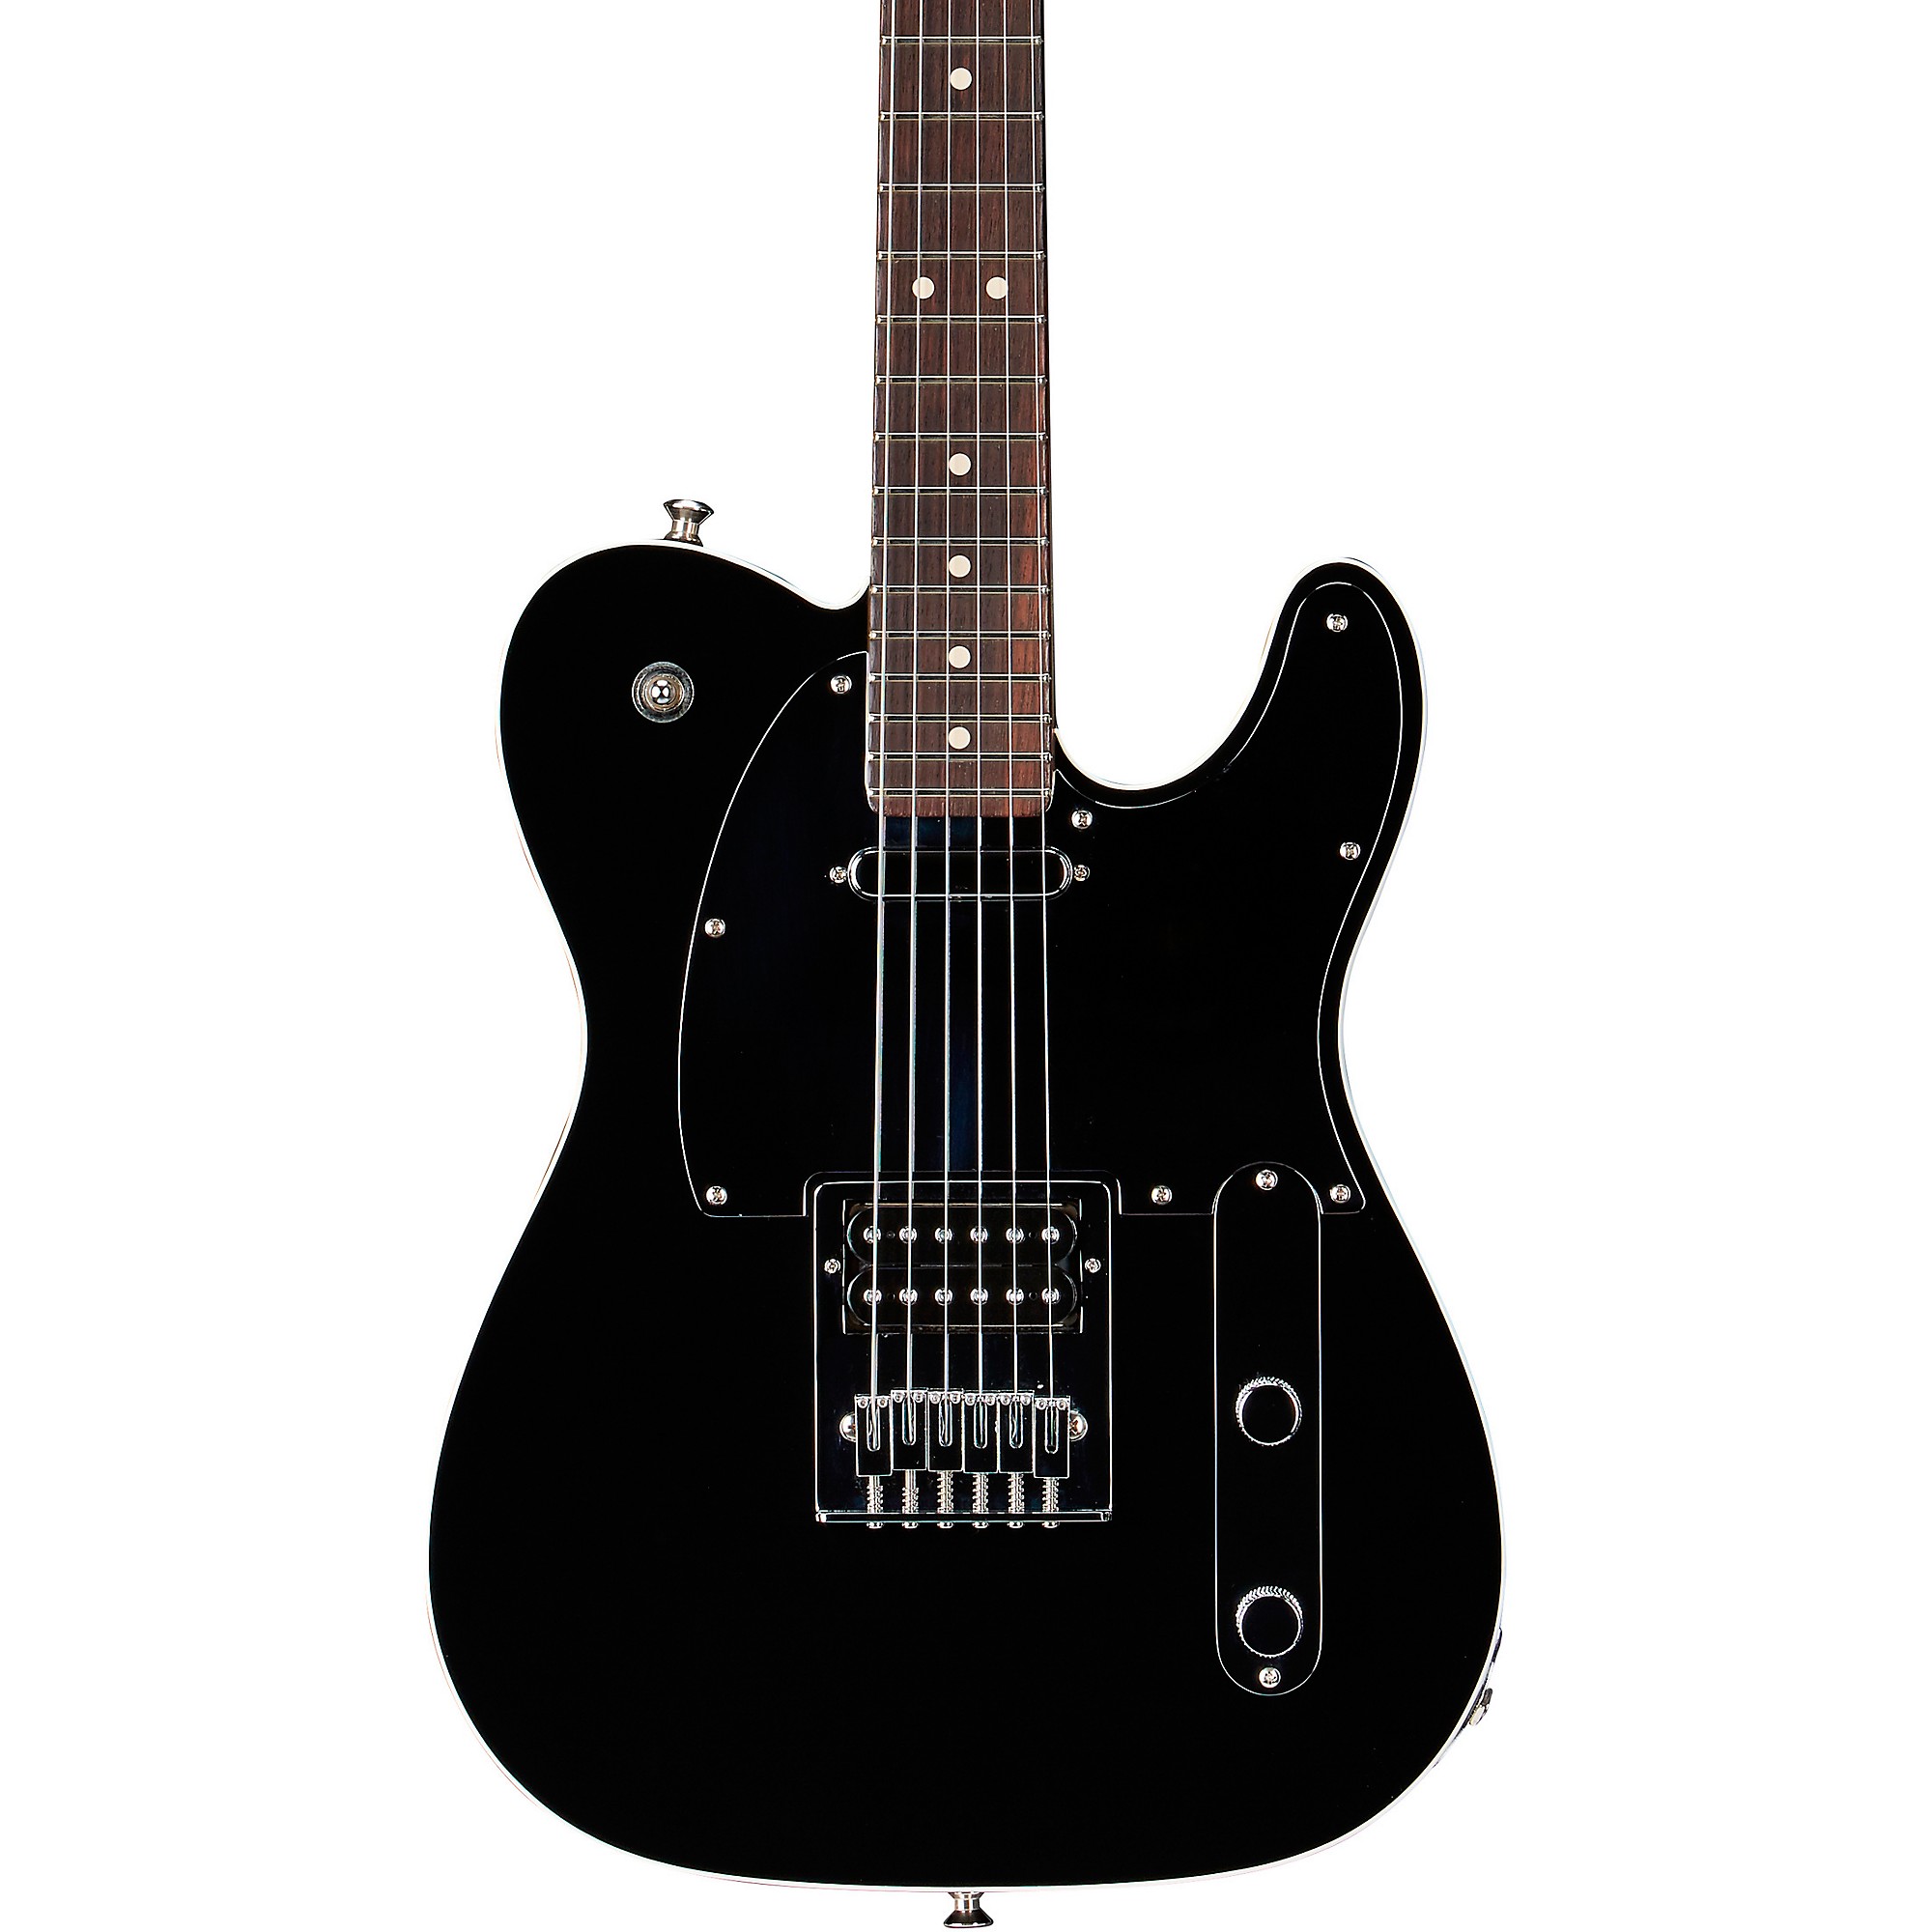 Hula hoop Manuscript Get married Fender Custom Shop John 5 Signature Telecaster NOS Electric Guitar Black |  Guitar Center